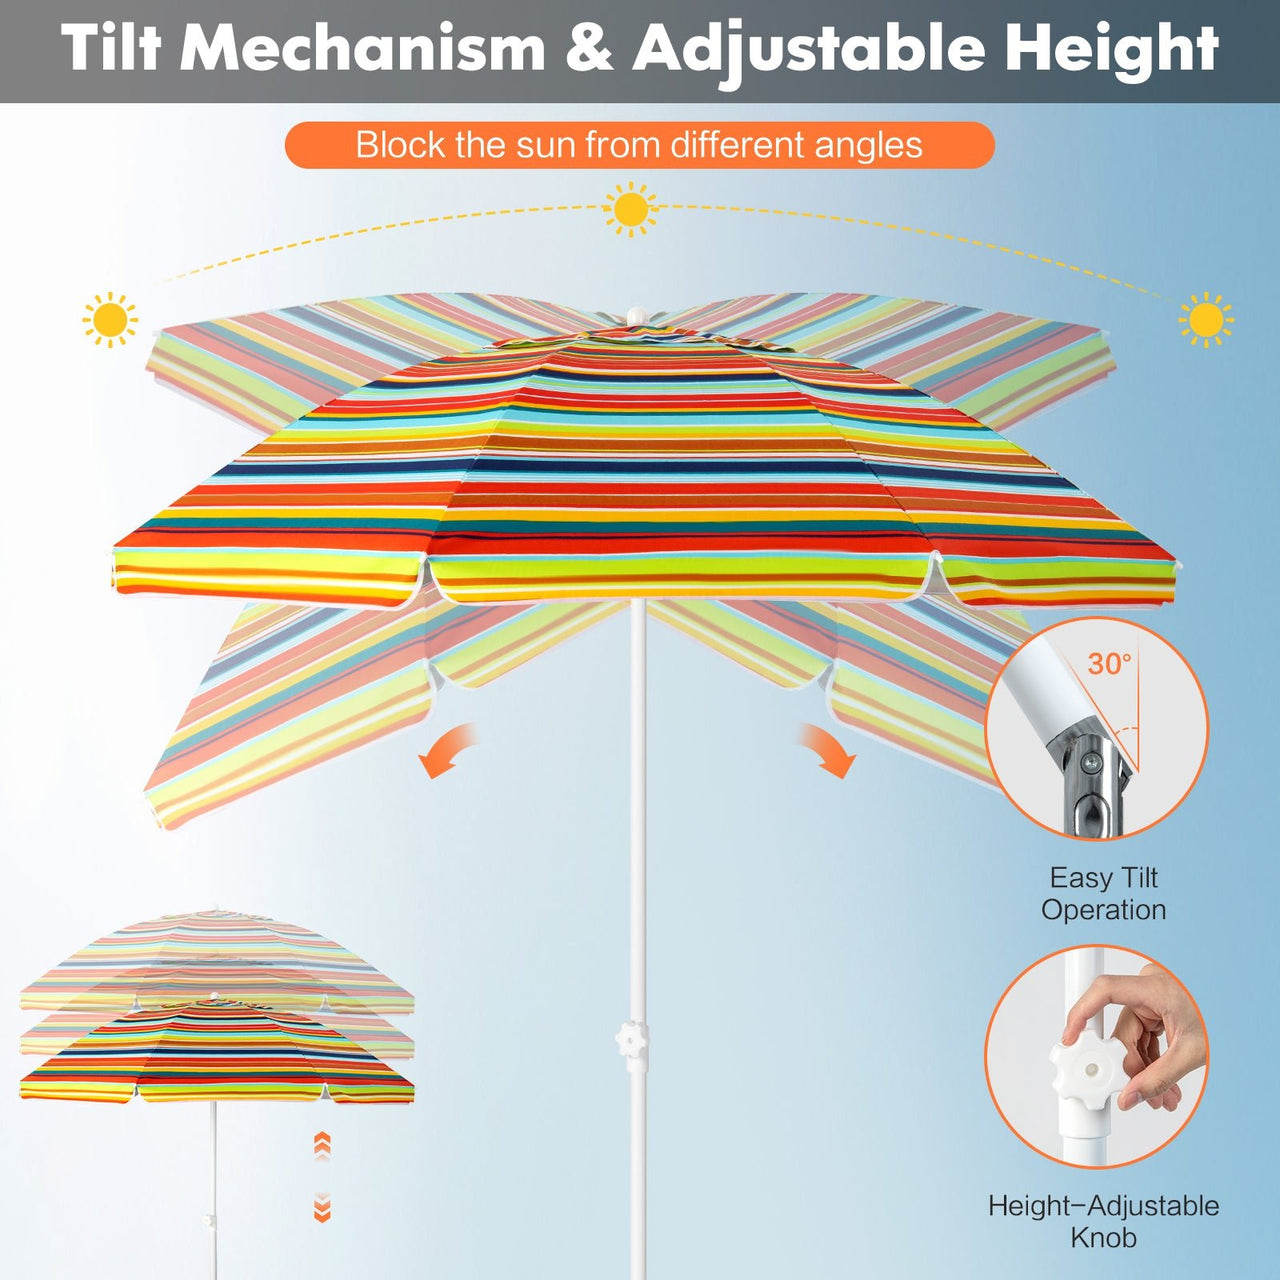 6.5 Feet Patio Beach Umbrella with Waterproof Polyester Fabric